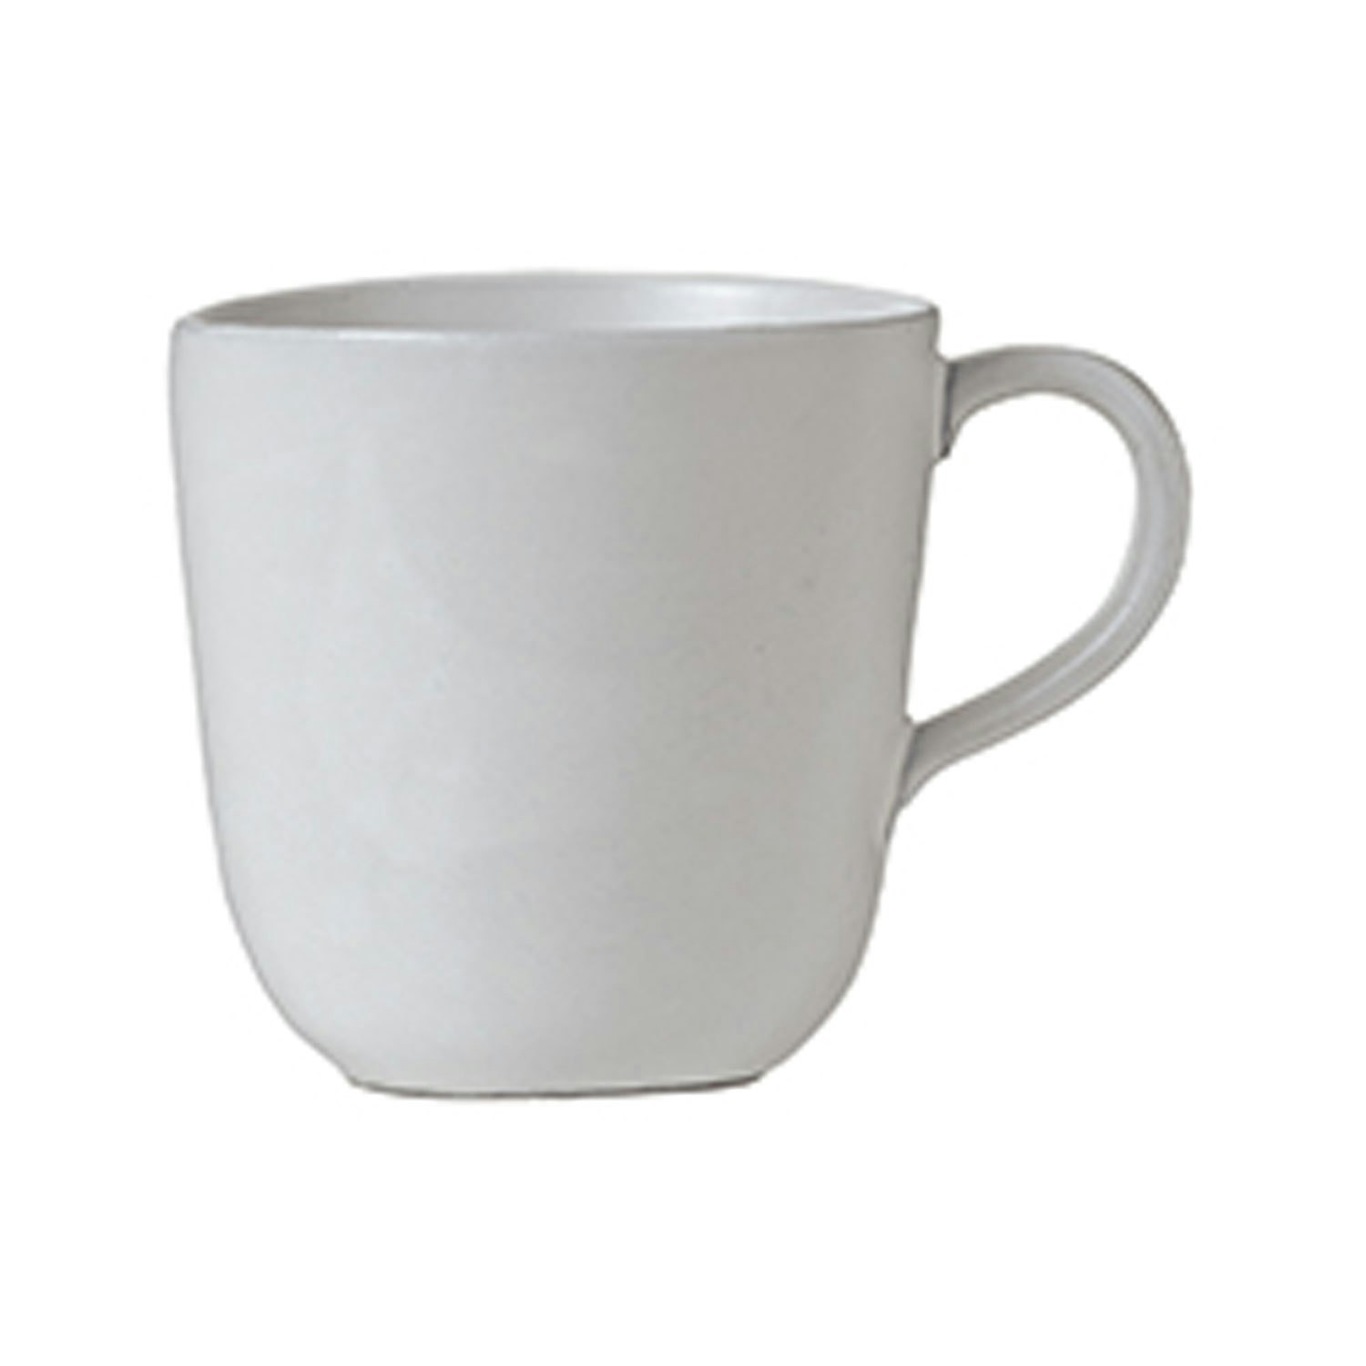 https://royaldesign.com/image/2/aida-raw-coffee-mug-with-handle-20-cl-brown-10?w=800&quality=80